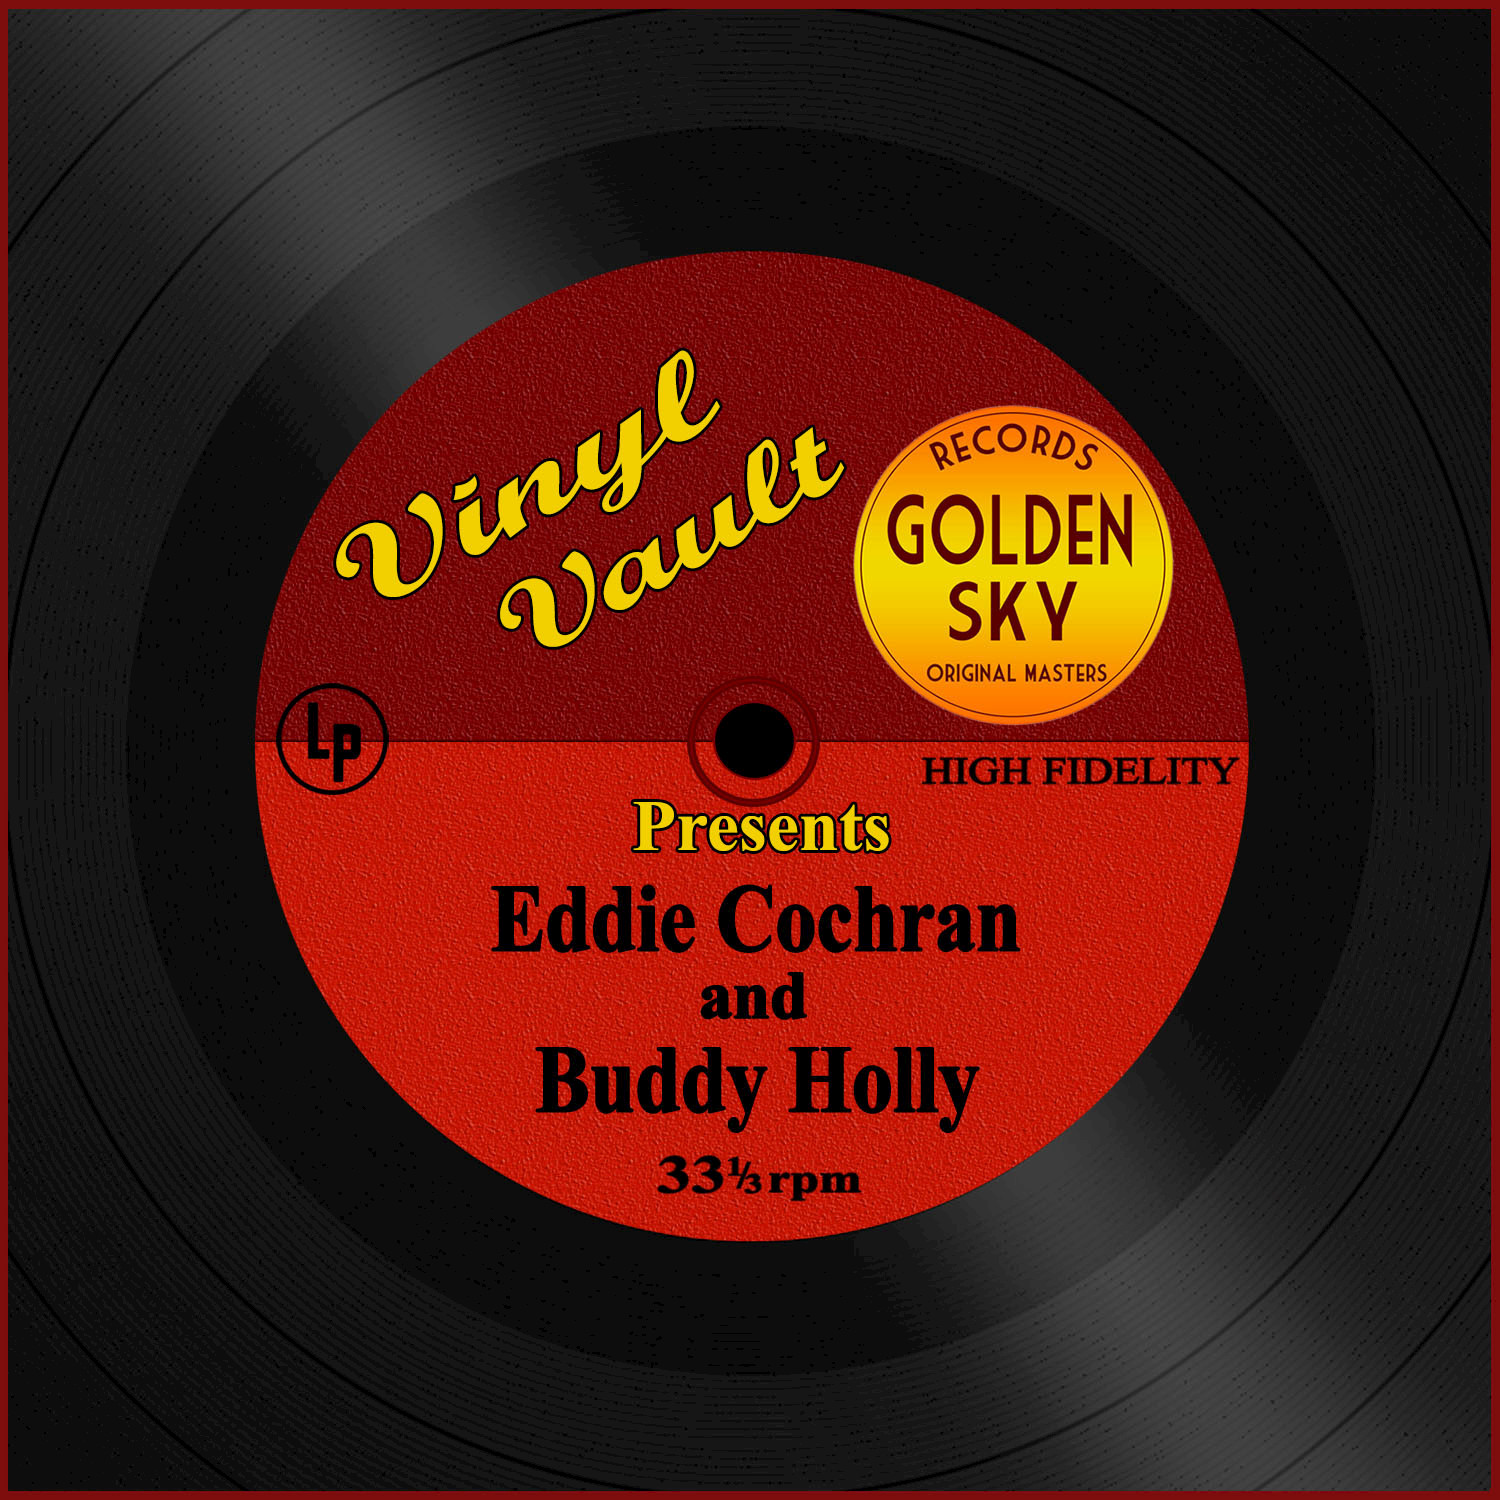 Vinyl Vault Presents Eddie Cochran and Buddy Holly